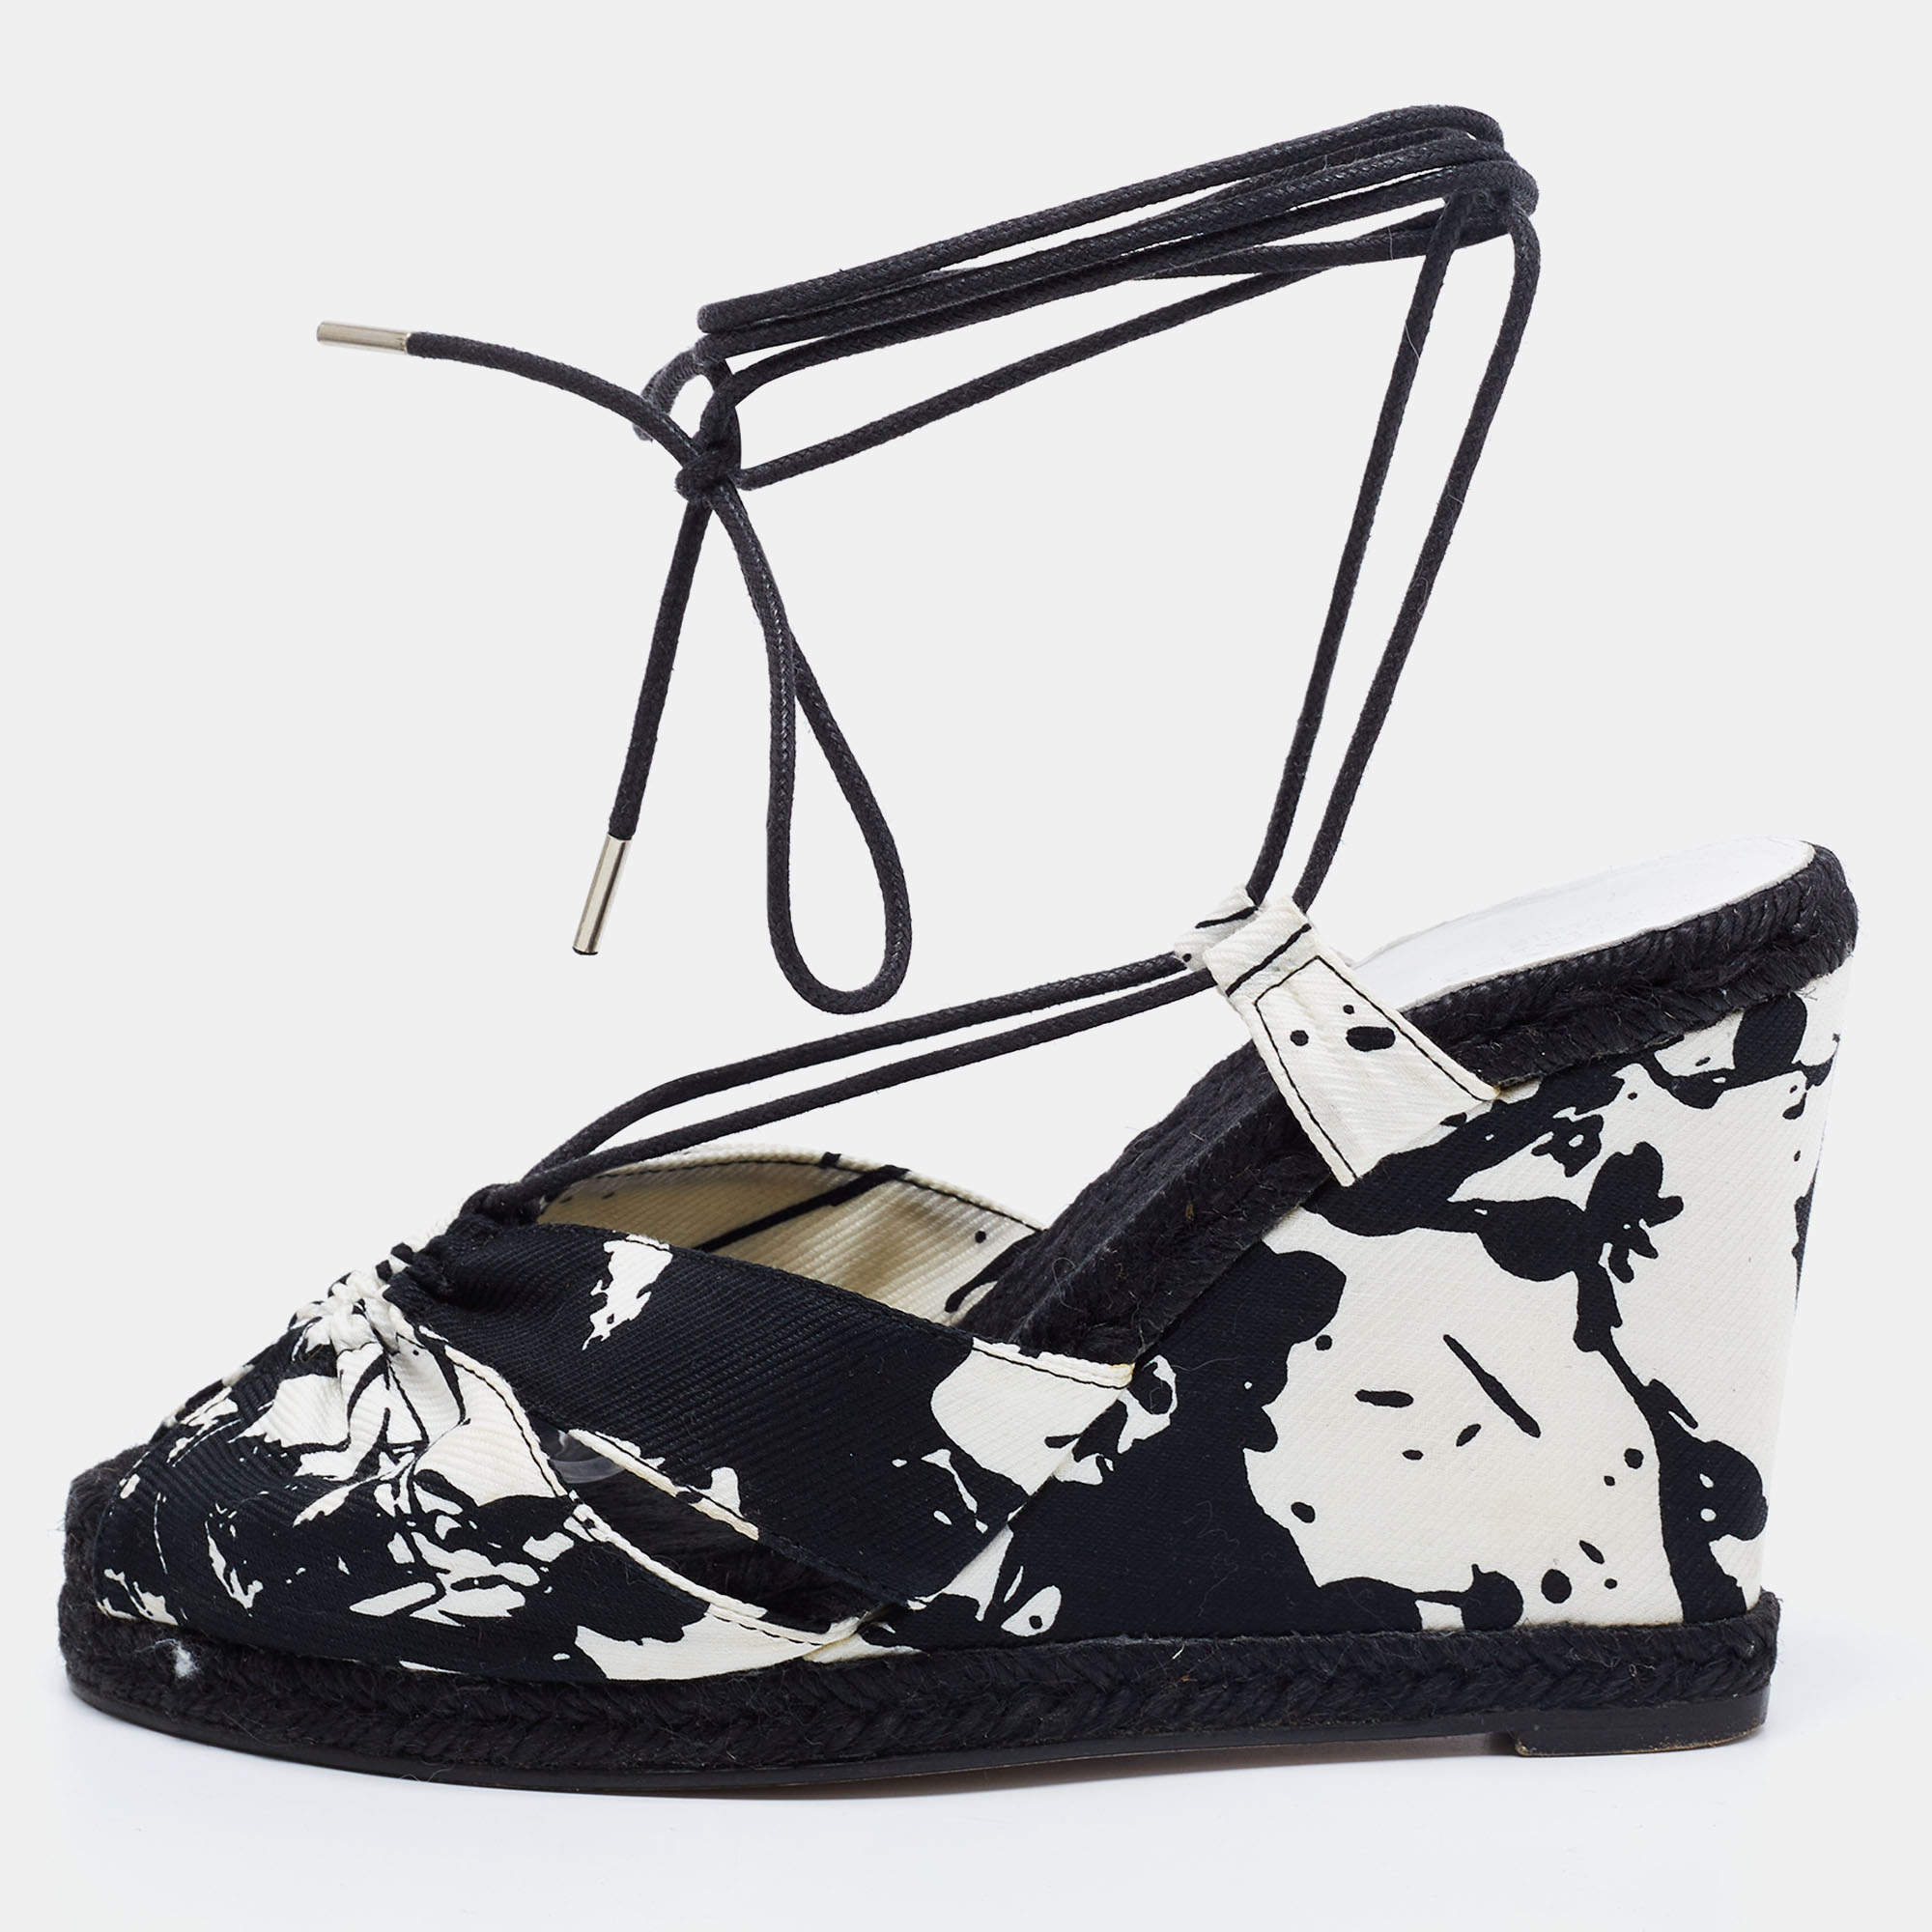 Hermes Black/White Canvas Wedge Sandals Size 36